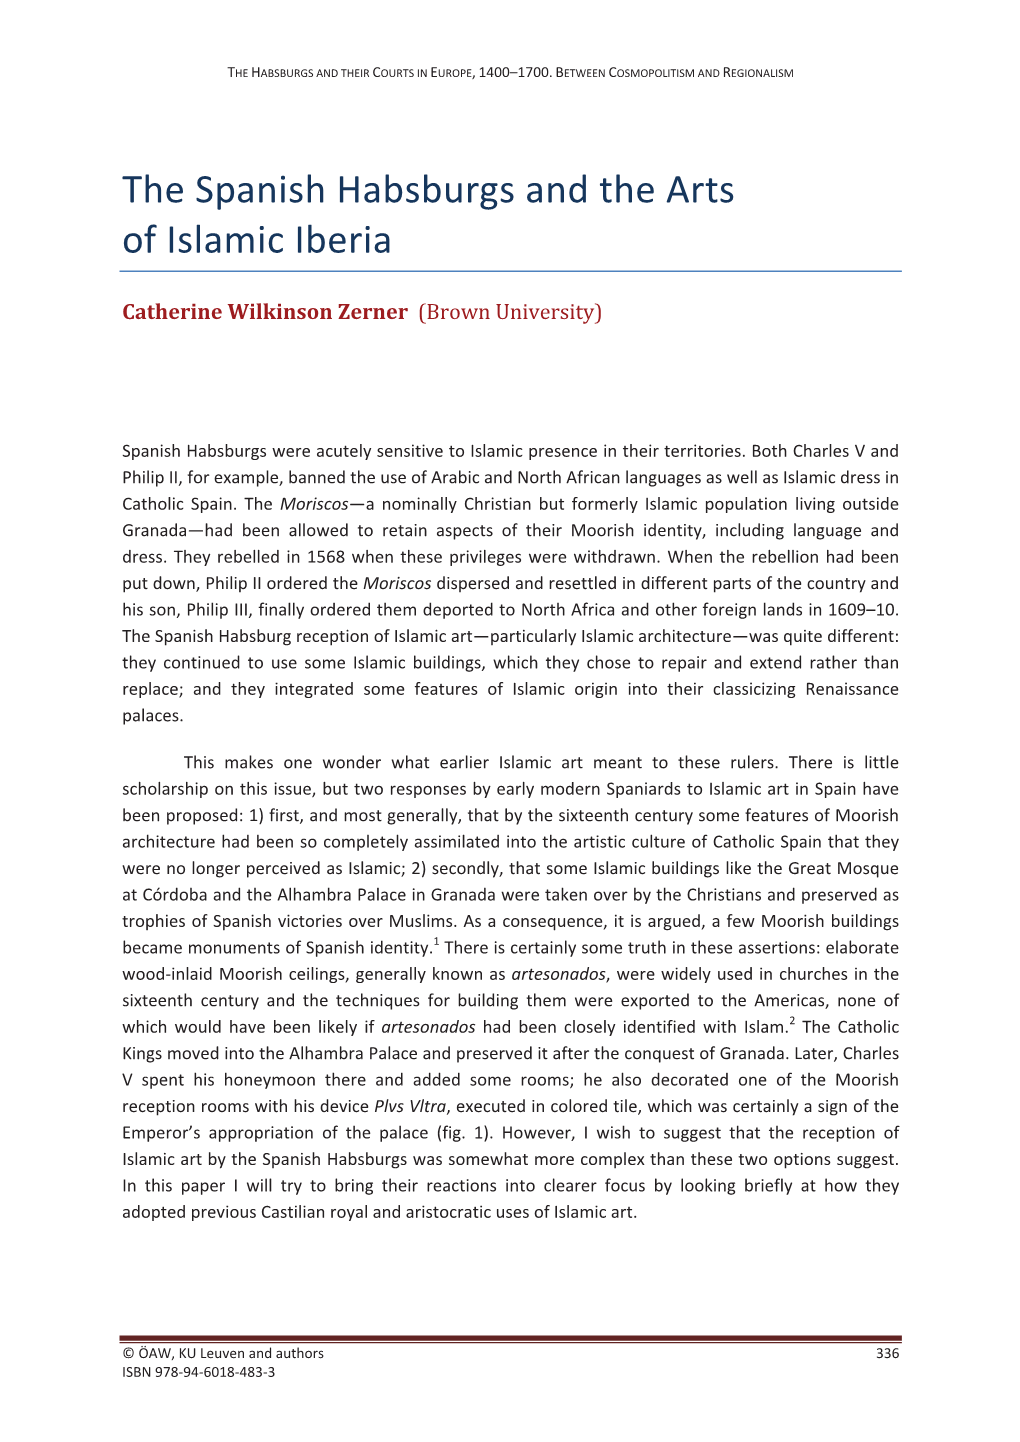 The Spanish Habsburgs and the Arts of Islamic Iberia